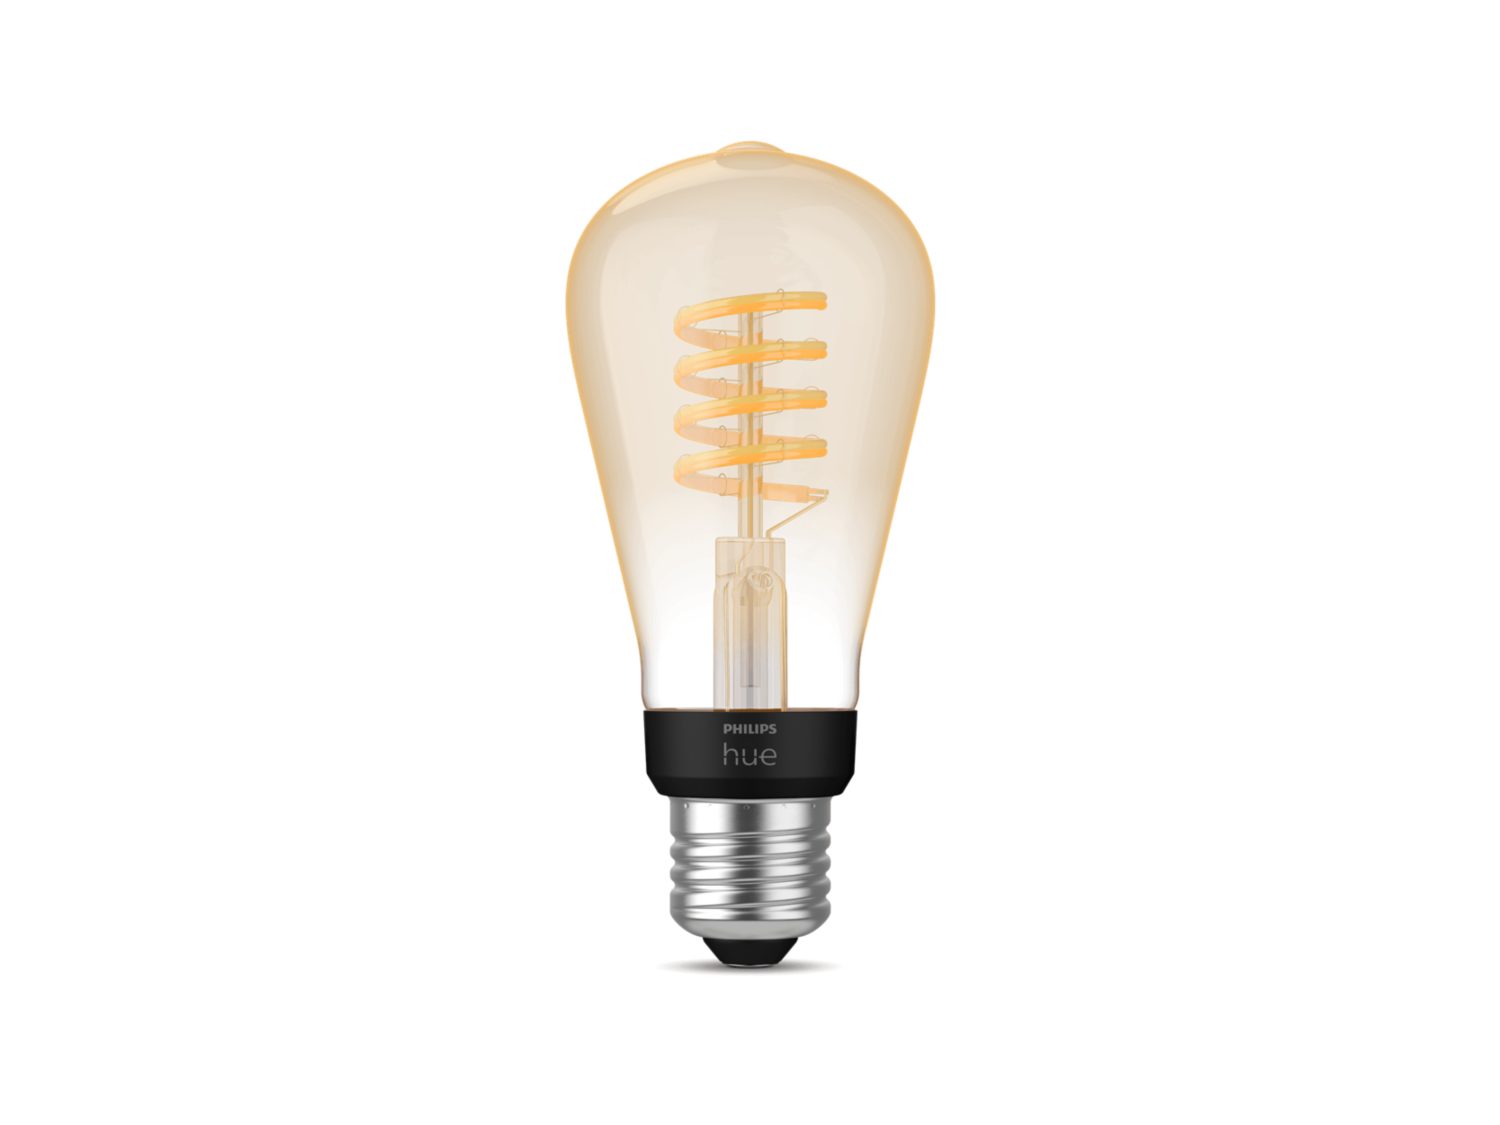 Philips Hue filament lamp Edison E27 White Ambiance